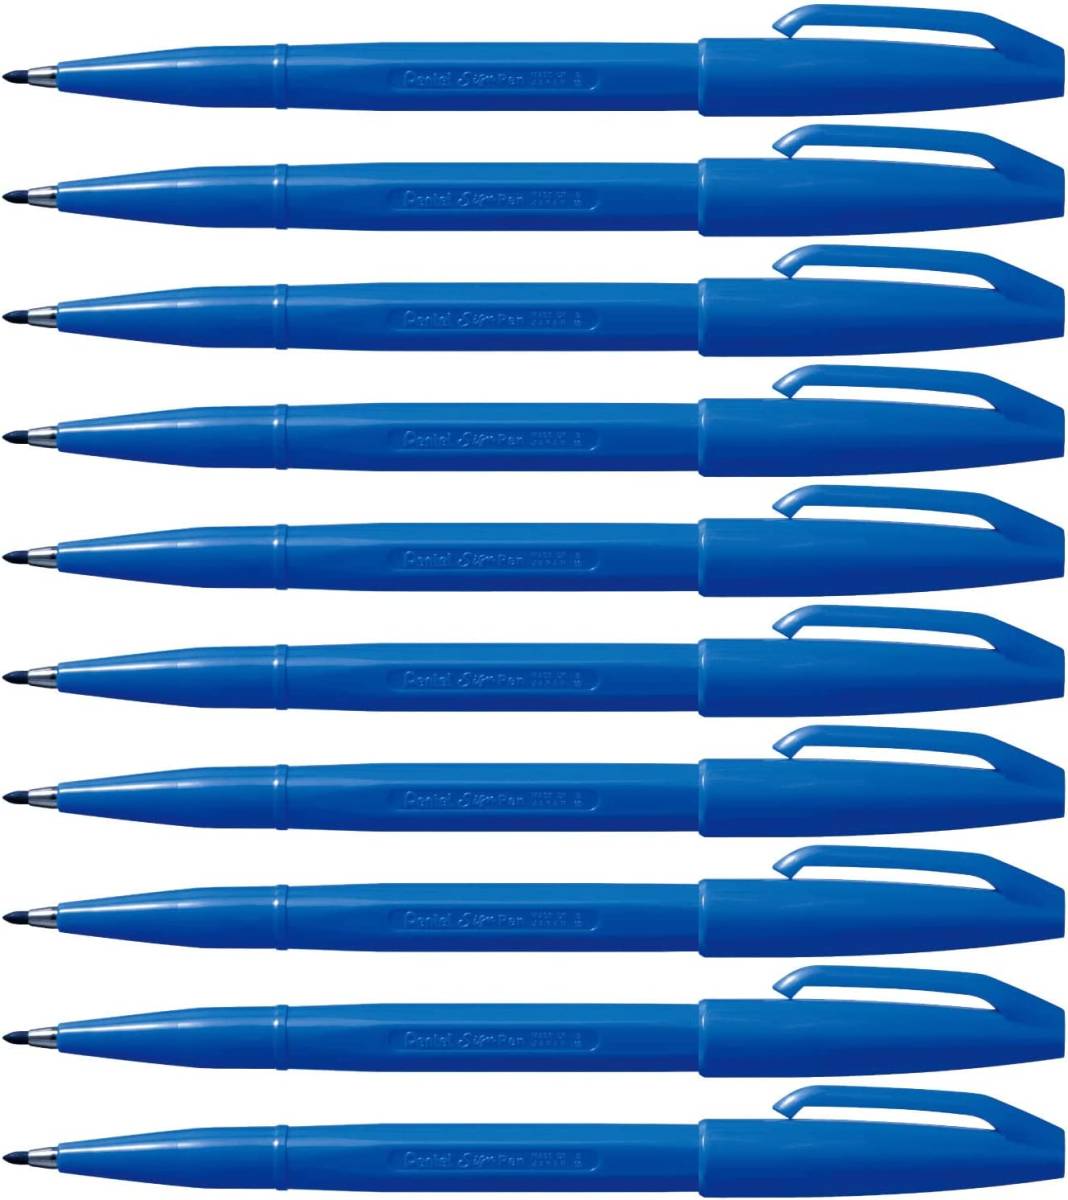  Pentel water-based pen felt-tip pen S520-CD blue 10 pcs set 